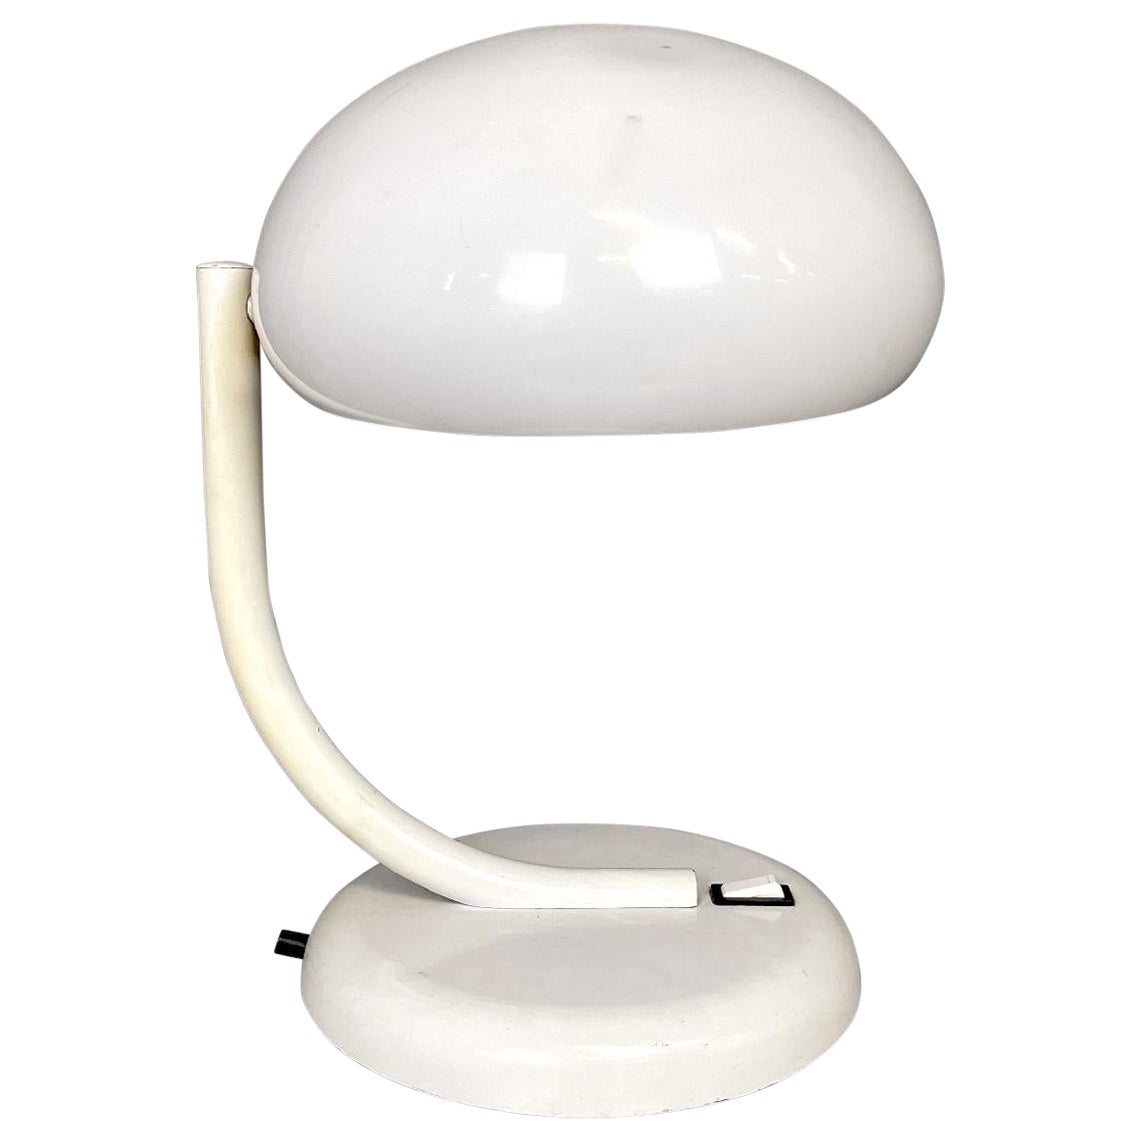 Italian mid-century modern round white table lamp by Stilnovo, 1960s